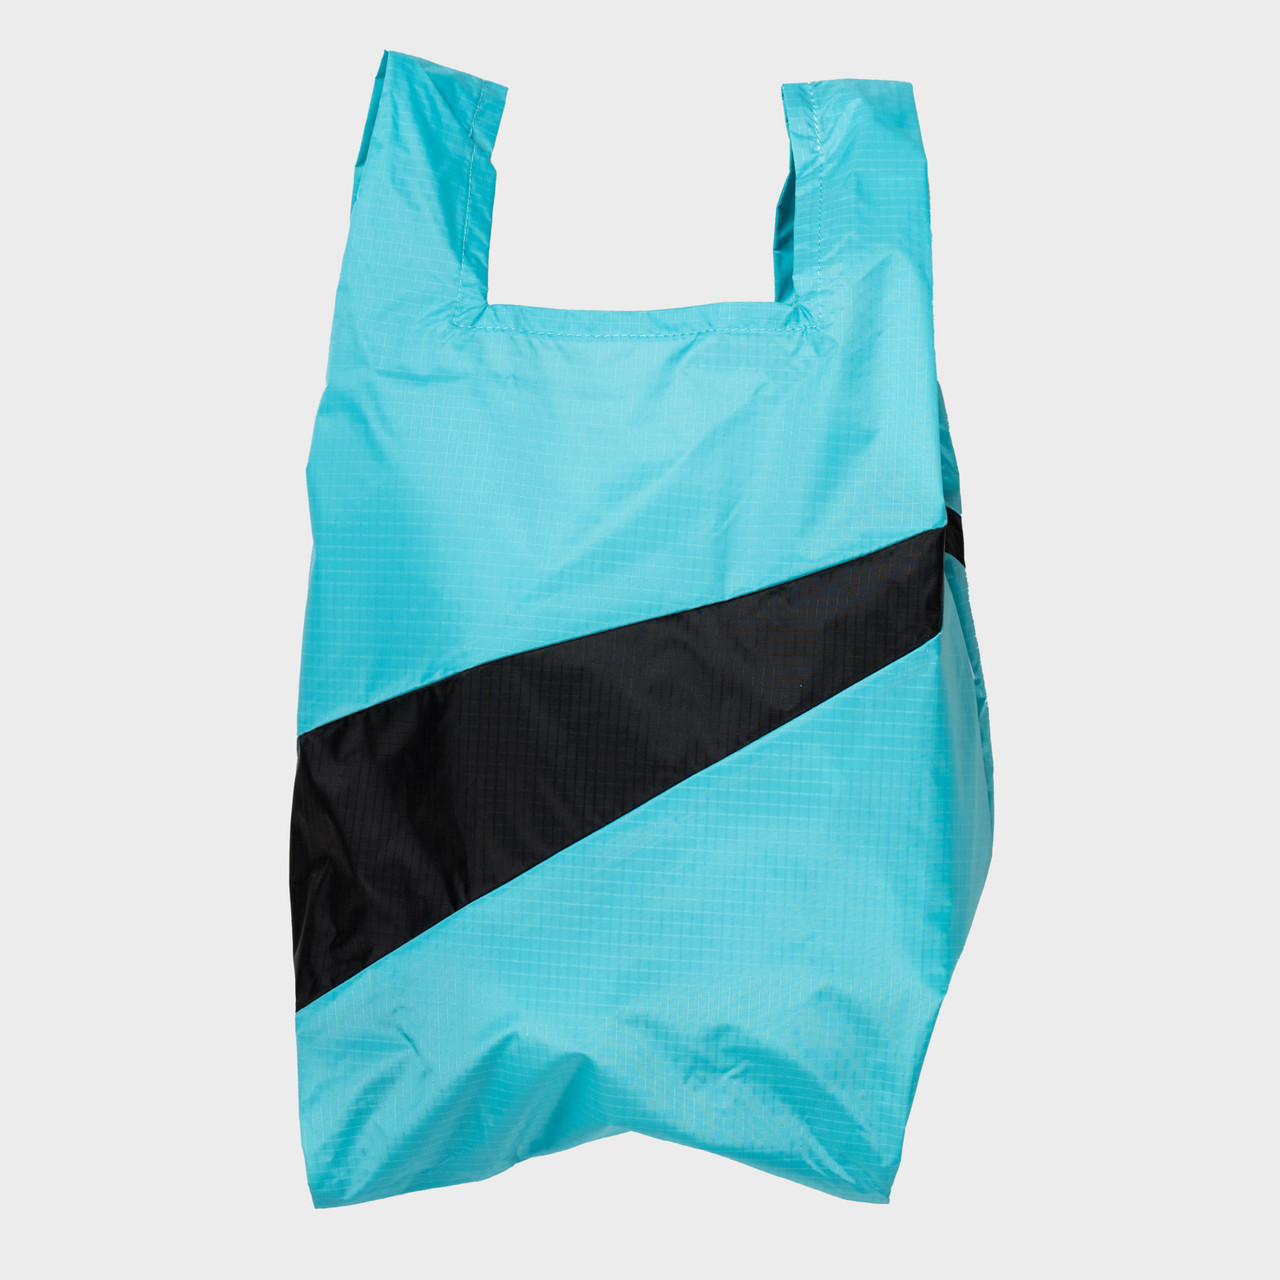 Shopping Bag M Celeste-Nero -  - Le Conturbanti Concept Store